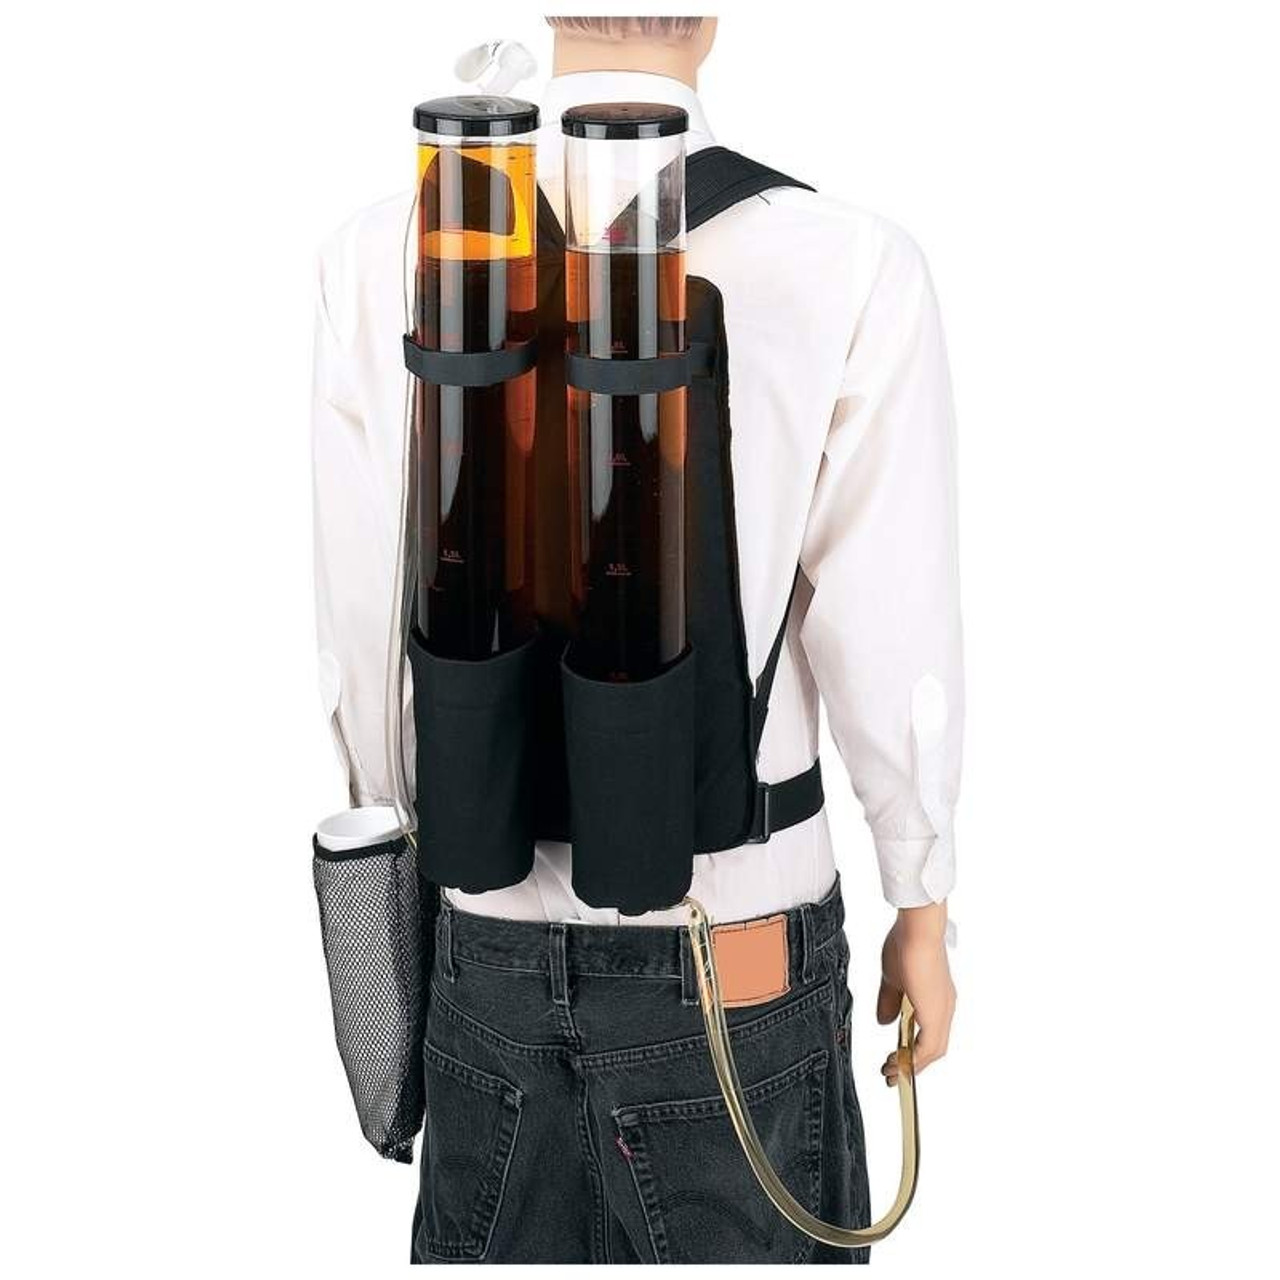 Backpack dual dispenser , beer,alcohol ,party, drinks, shots, cylinder dispenser,club, bar, games,